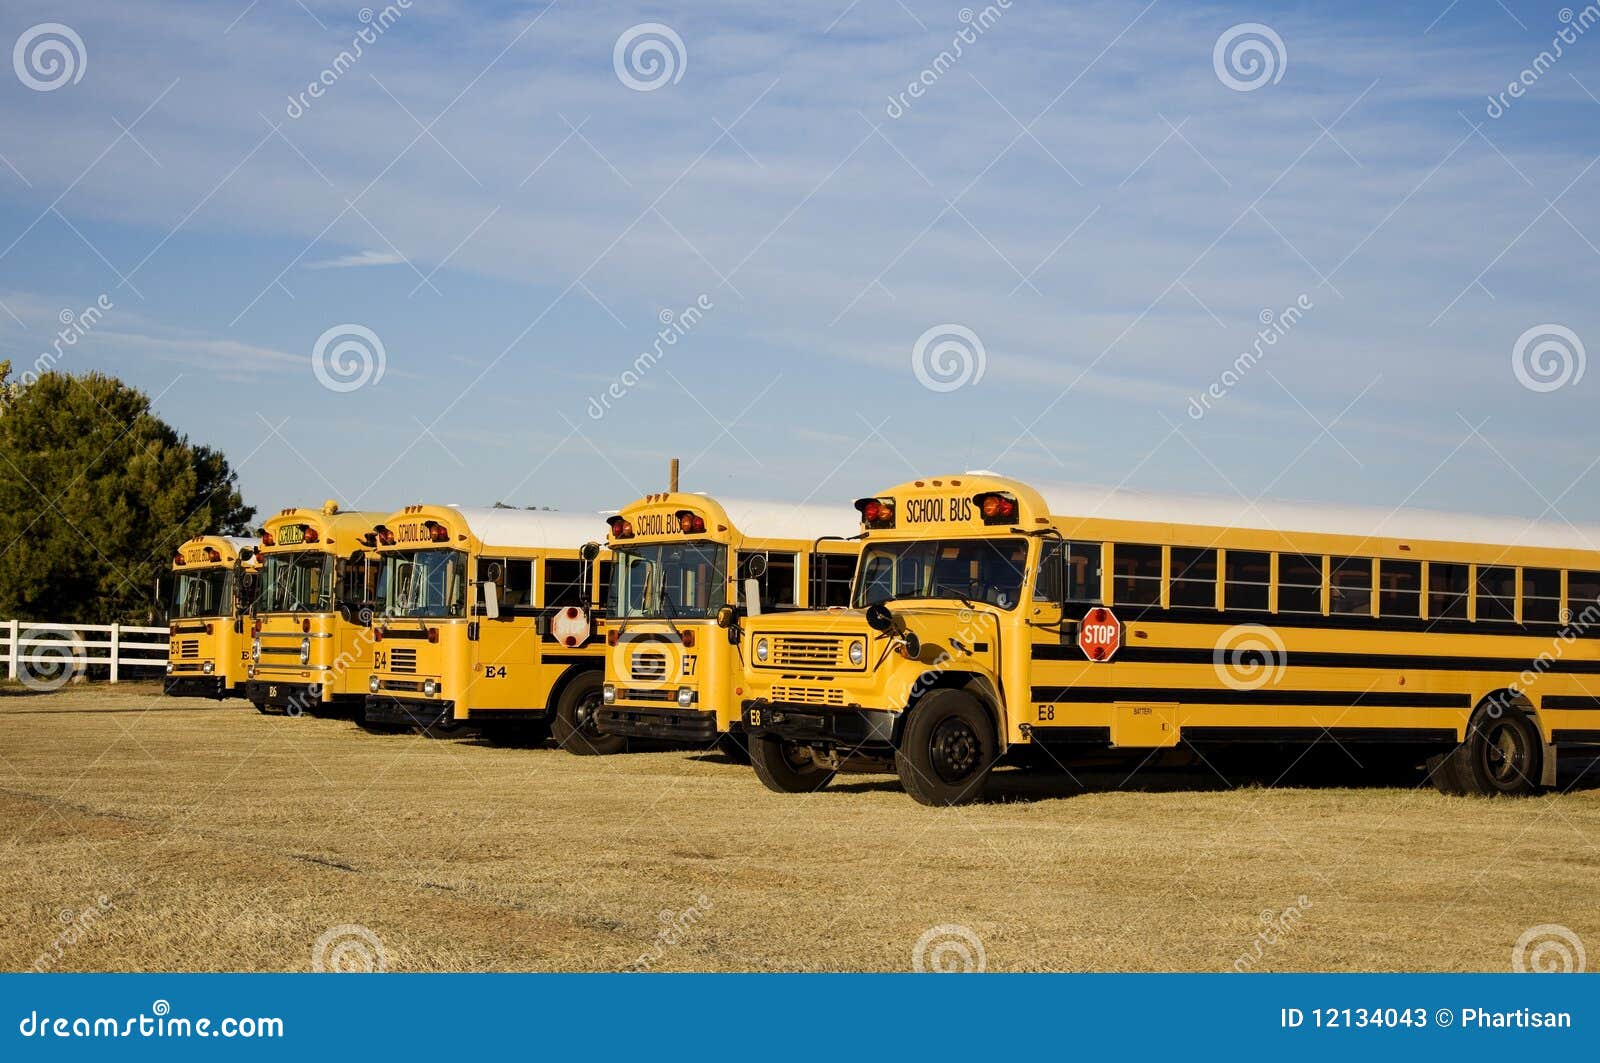 school-buses-parked-outside-school-12134043.jpg